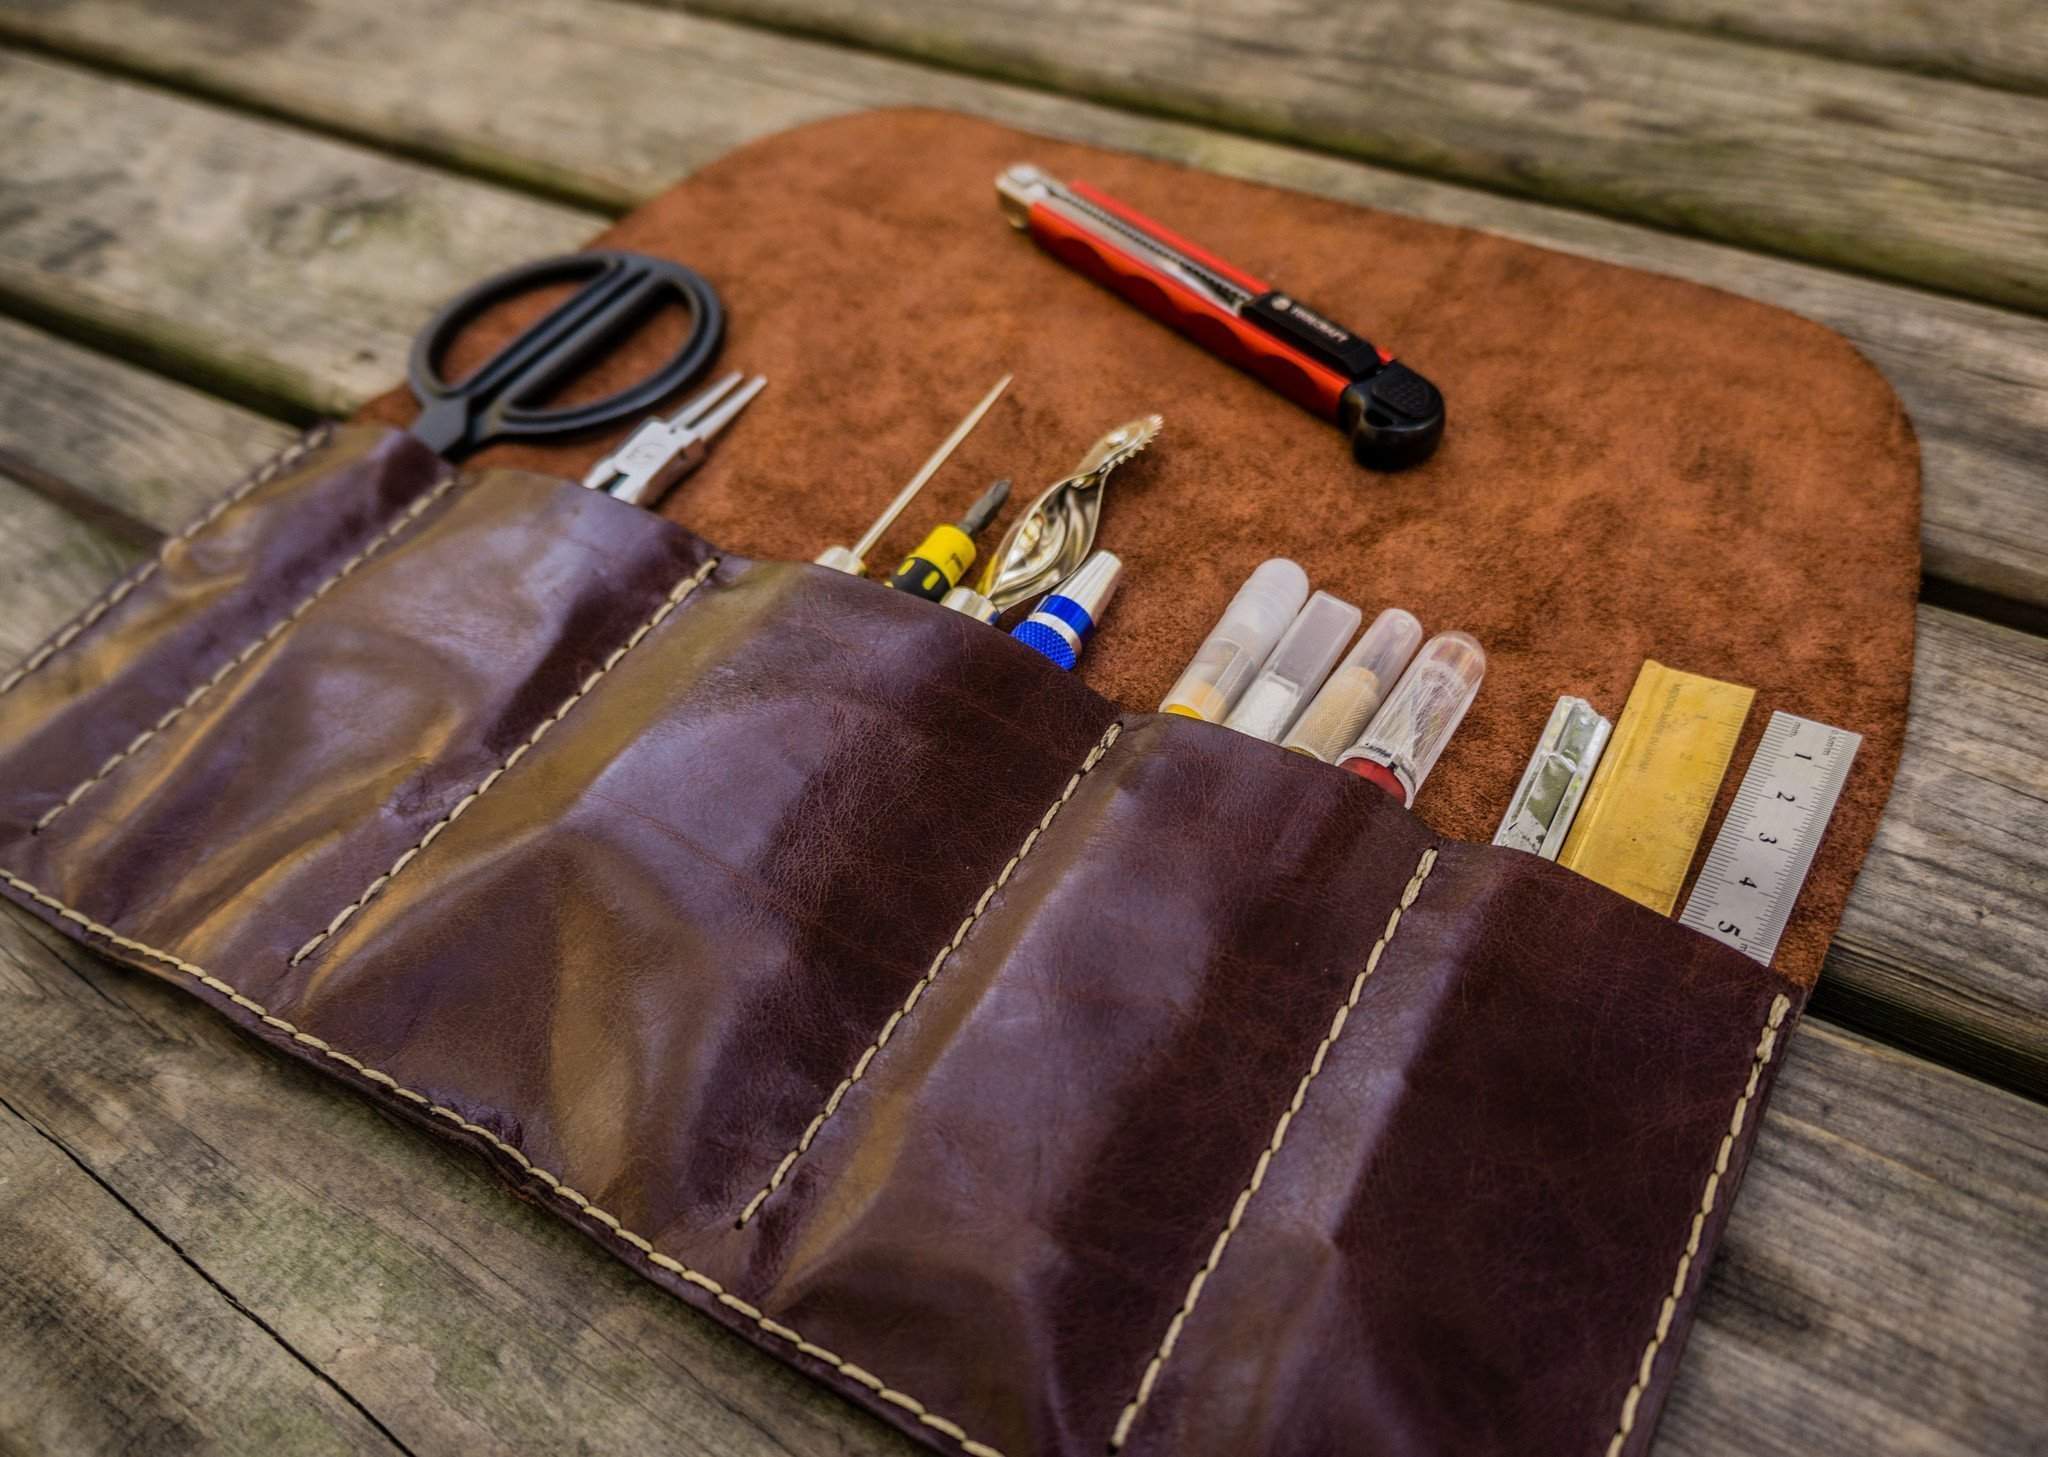 Rustic Genuine Leather Pencil Roll - Pen and Pencil Case - Dark Brown